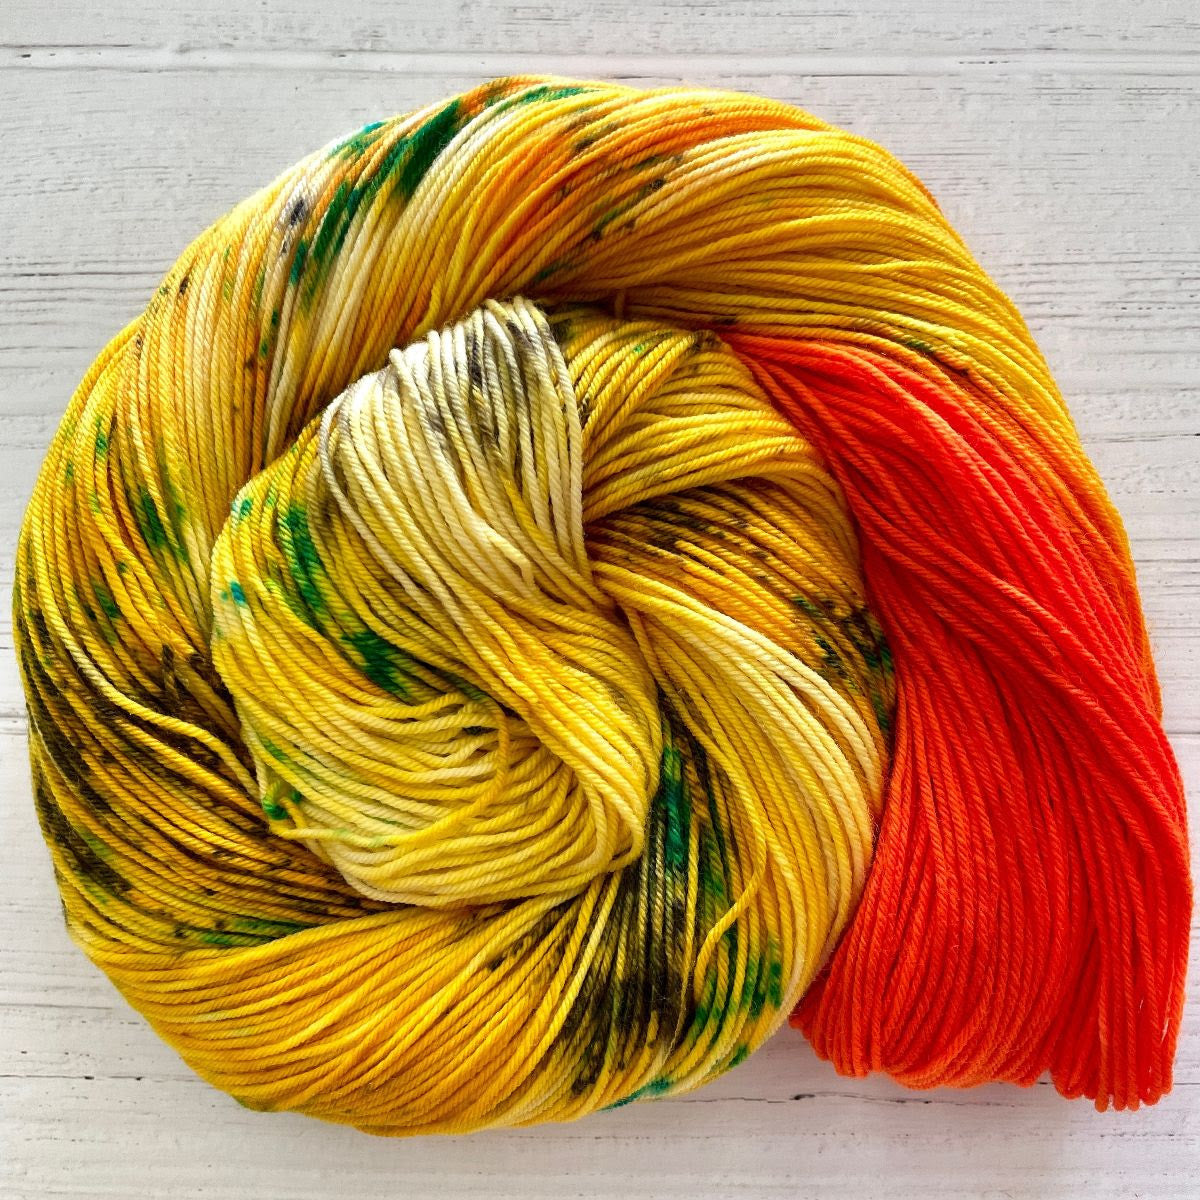 Knitted Wit Herstory 2022 yarn color Mango Street, a yellow/green/orange yarn, spiraled